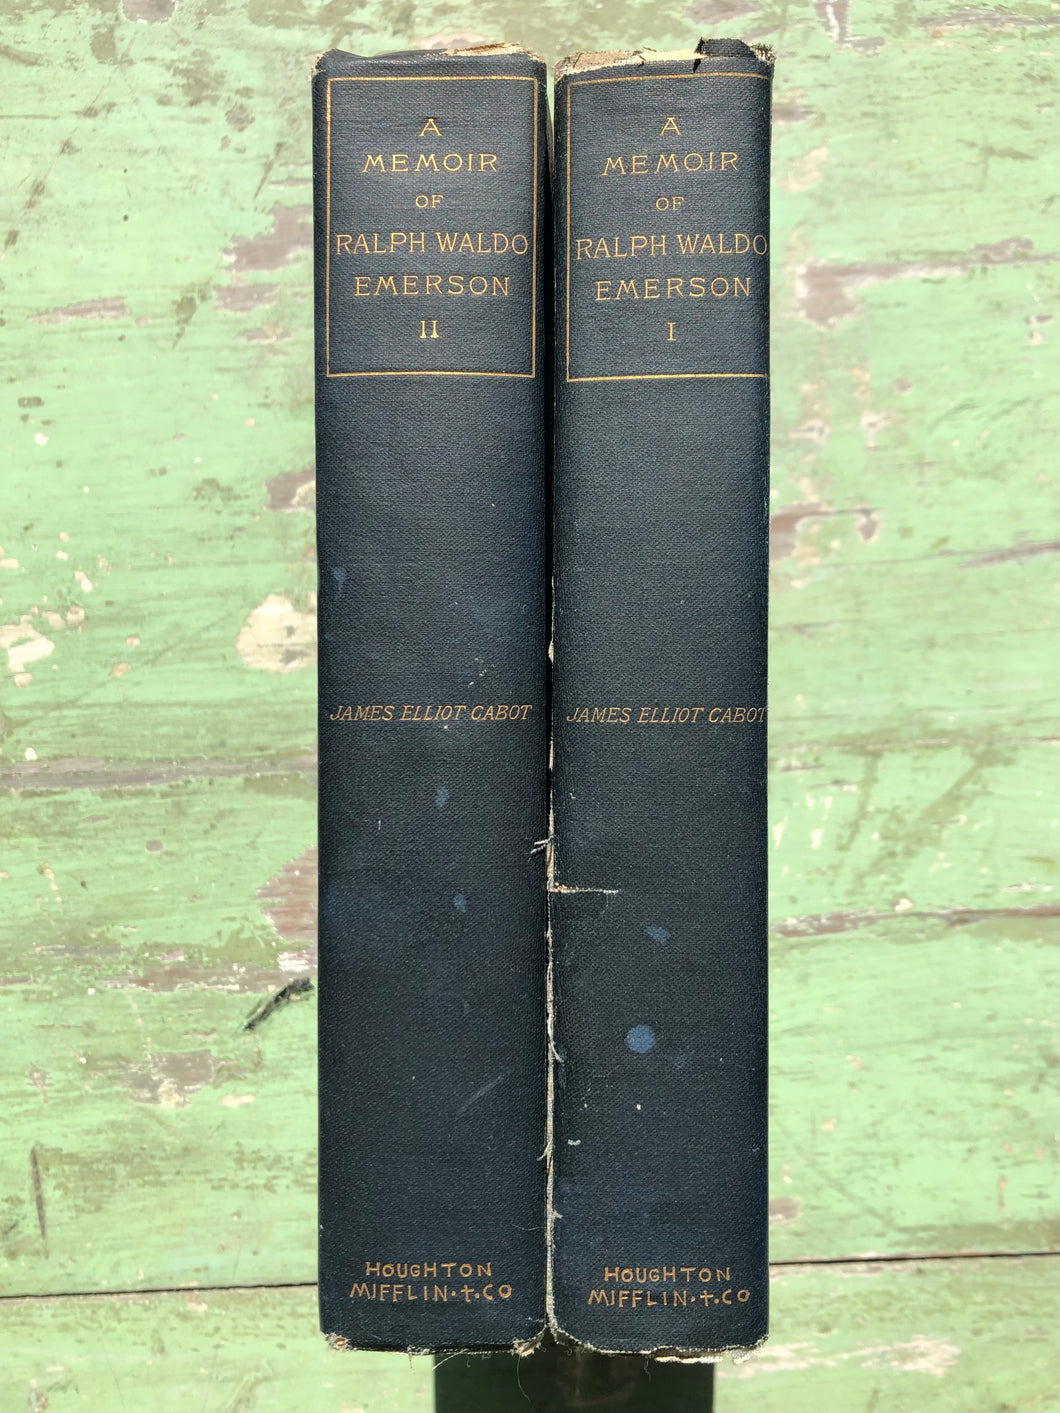 A Memoir of Ralph Waldo Emerson. Two Volume Set. by James Elliot Cabbot